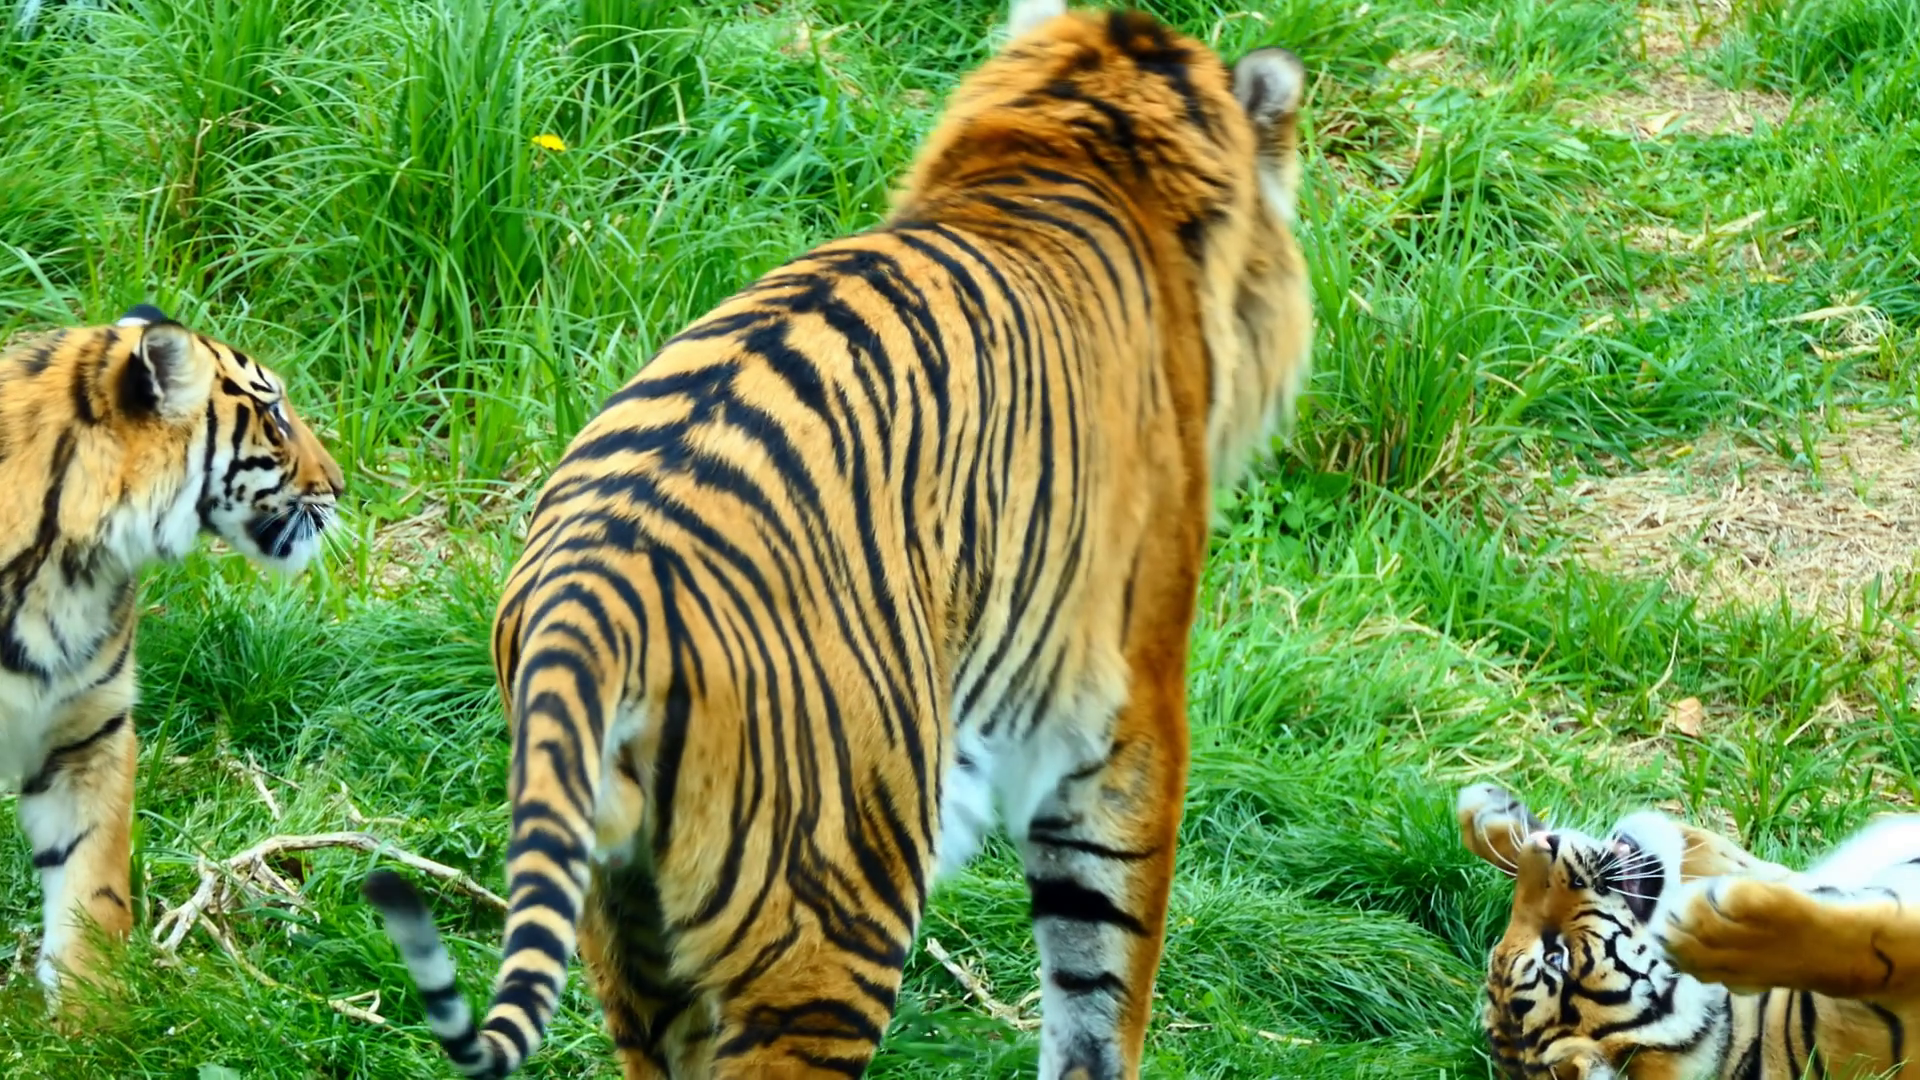 Adult tiger photo